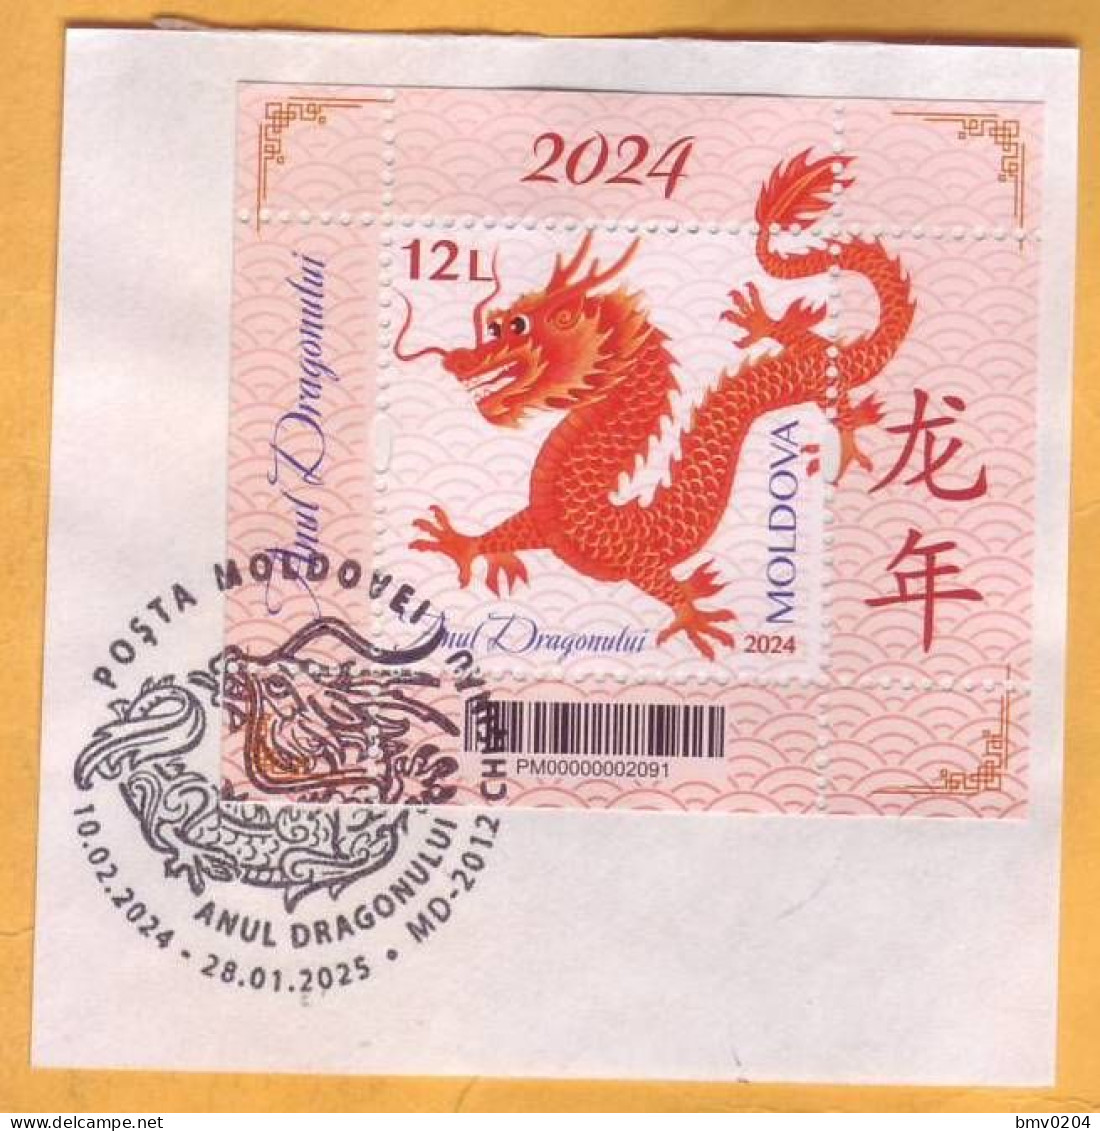 2024 Moldova  Special Postmark „Year Of The Dragon” Cutting From An Envelope. - Moldawien (Moldau)